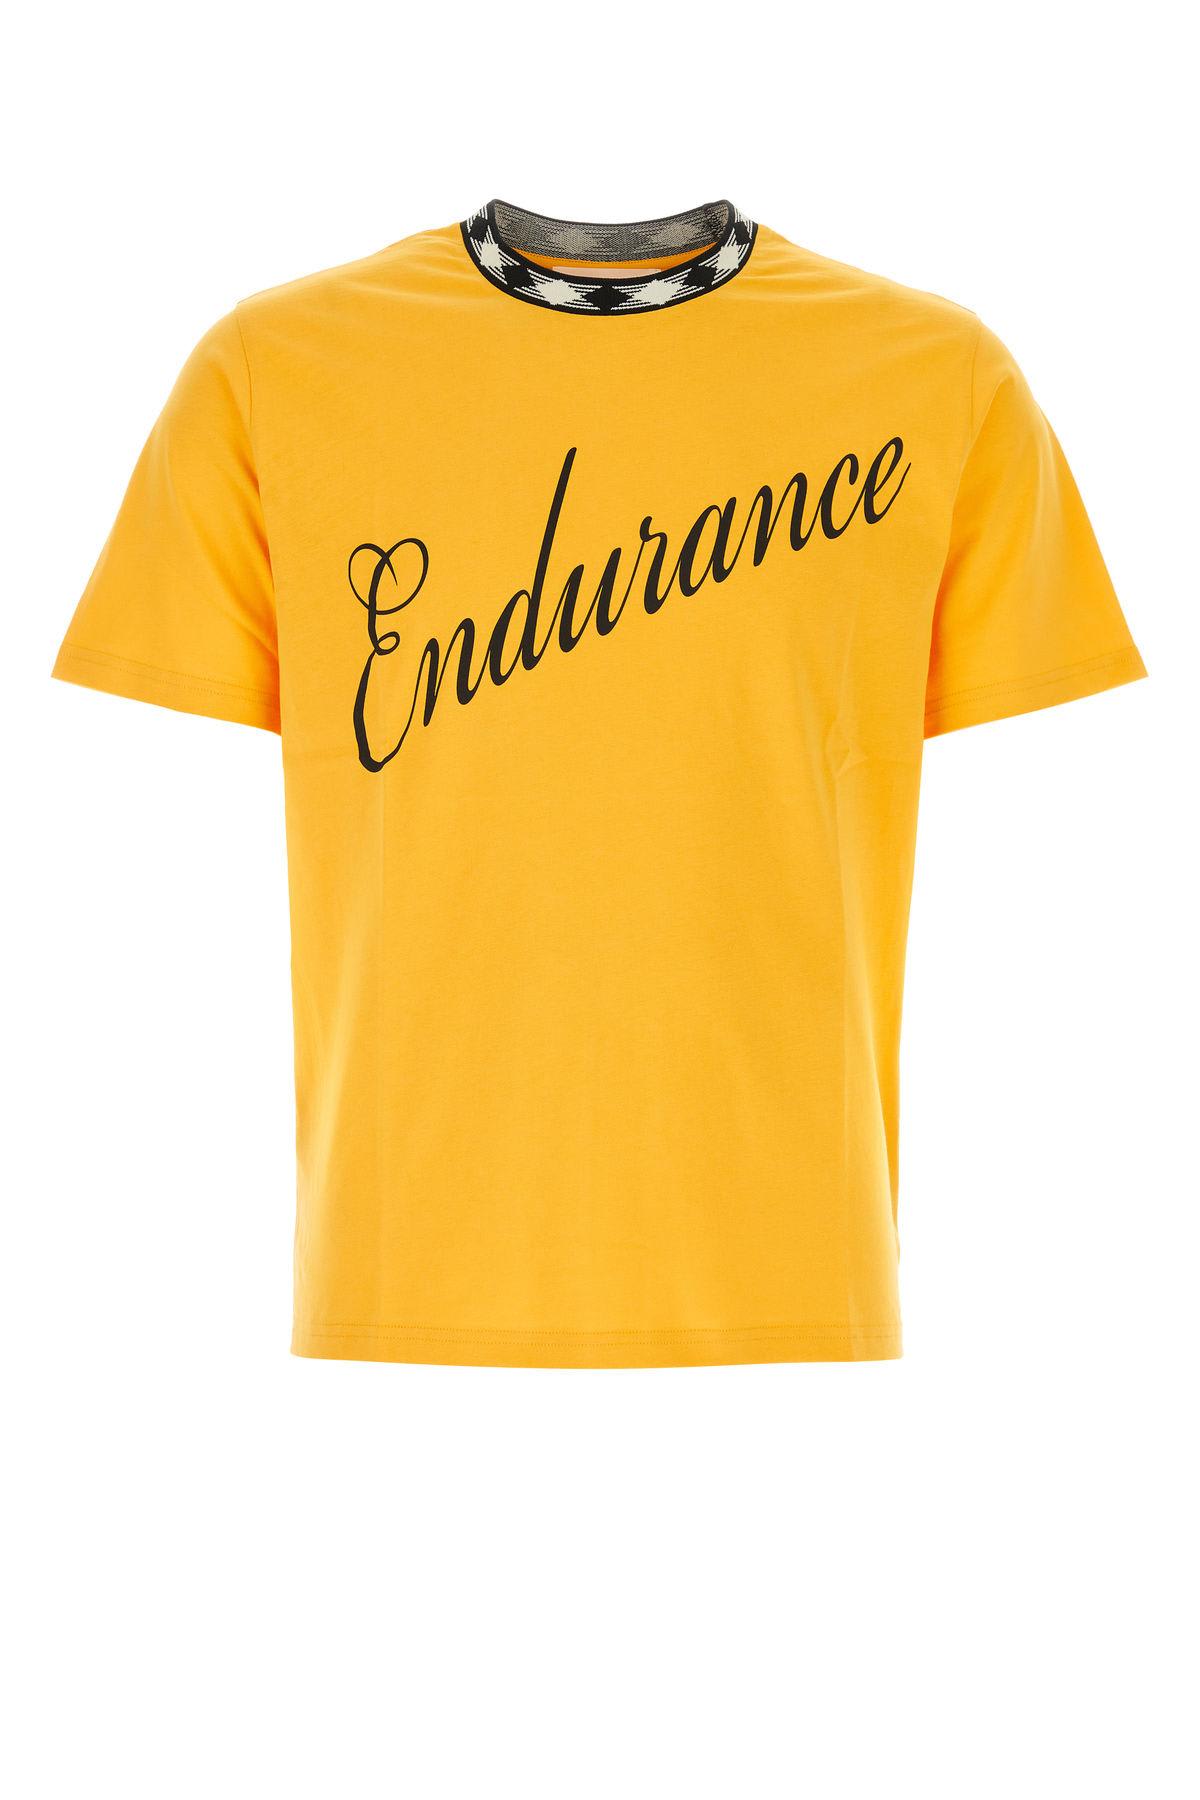 Shop Wales Bonner Yellow Cotton Endurance T-shirt In Giallo